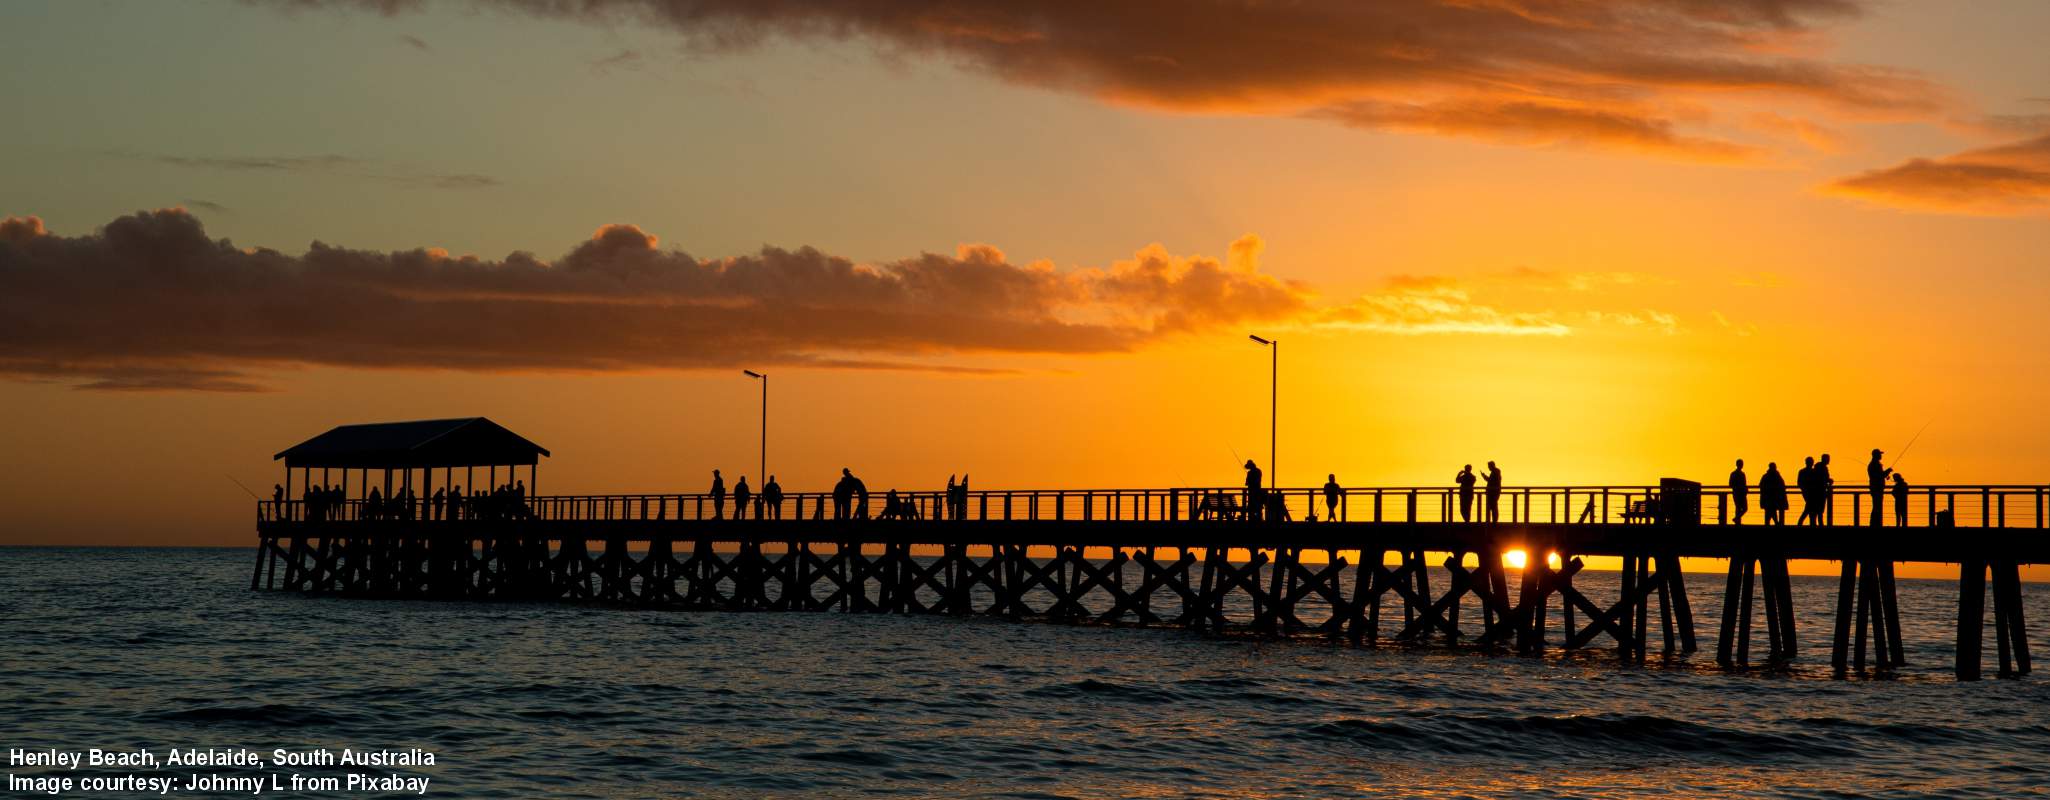 Western Adelaide Beaches image